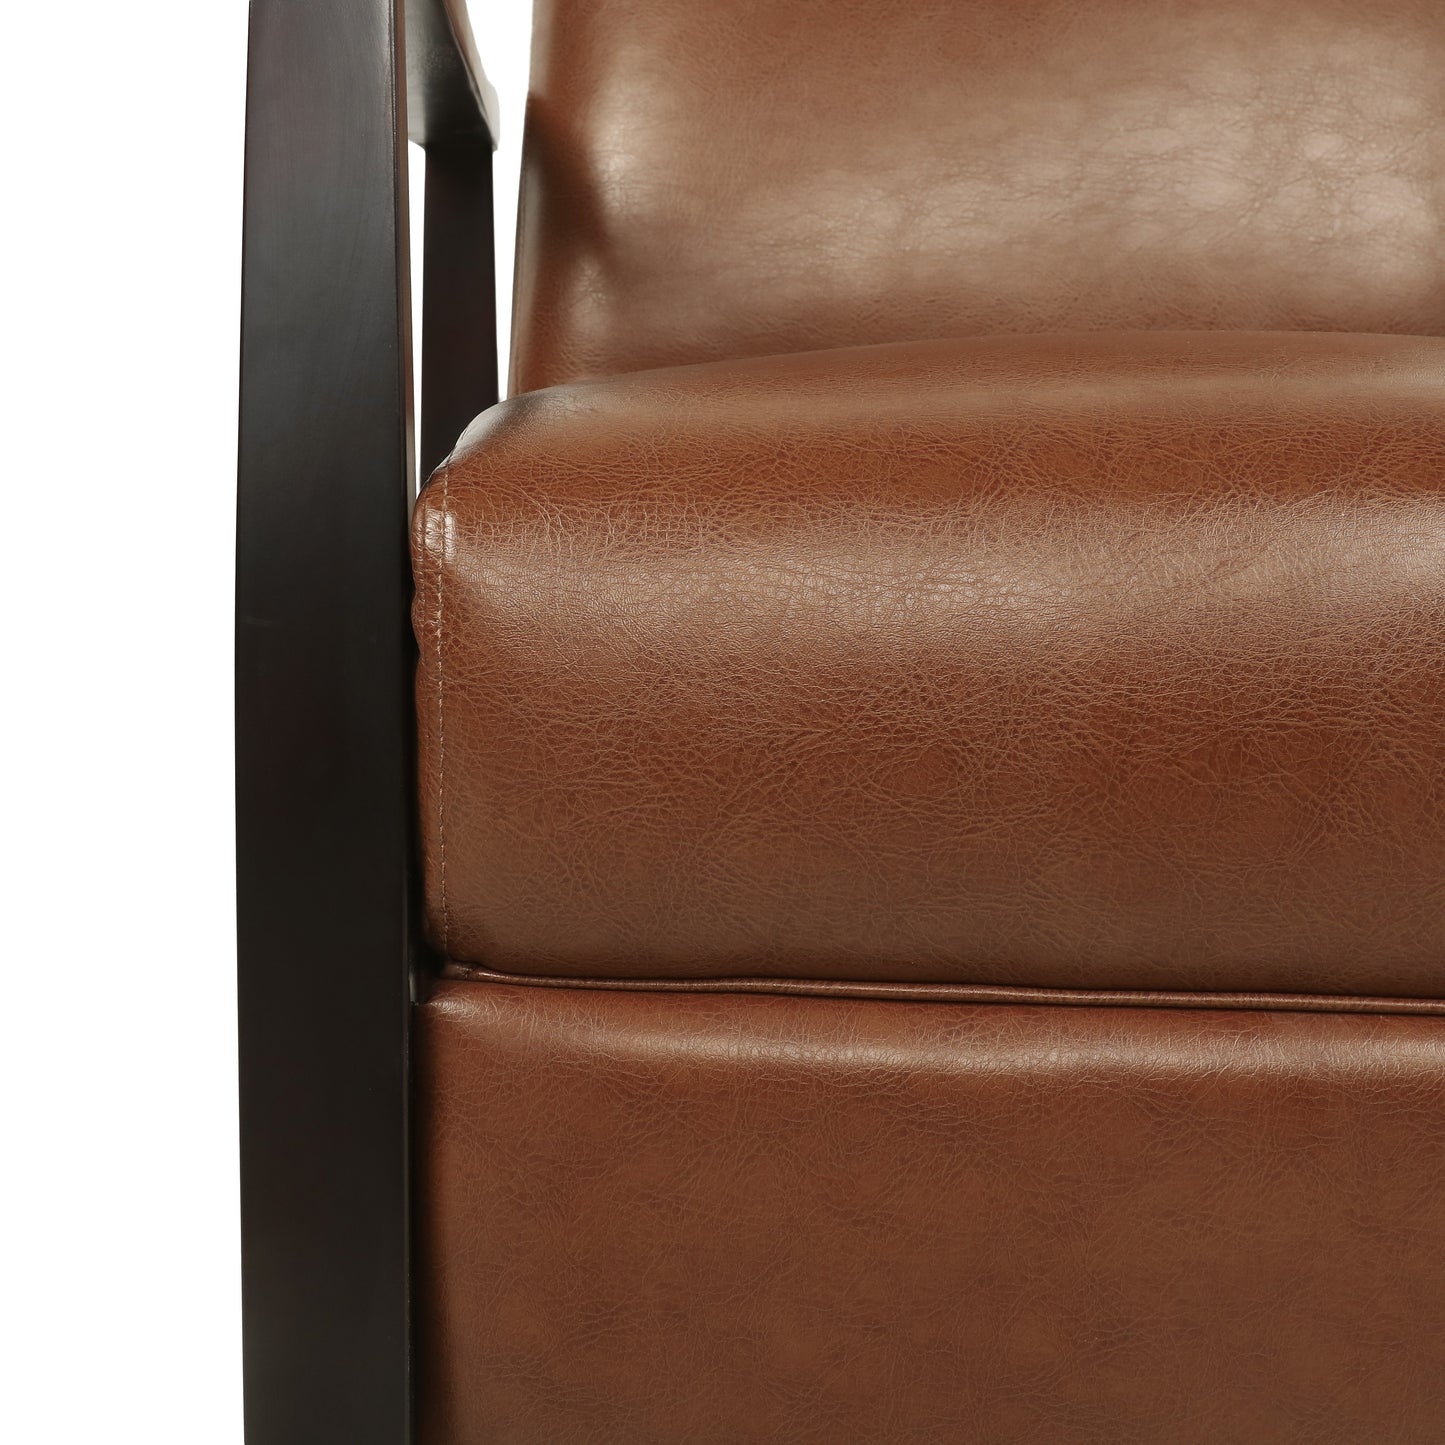 Mugo Mid Century Modern Faux Leather Upholstered Wood Pushback Recliner